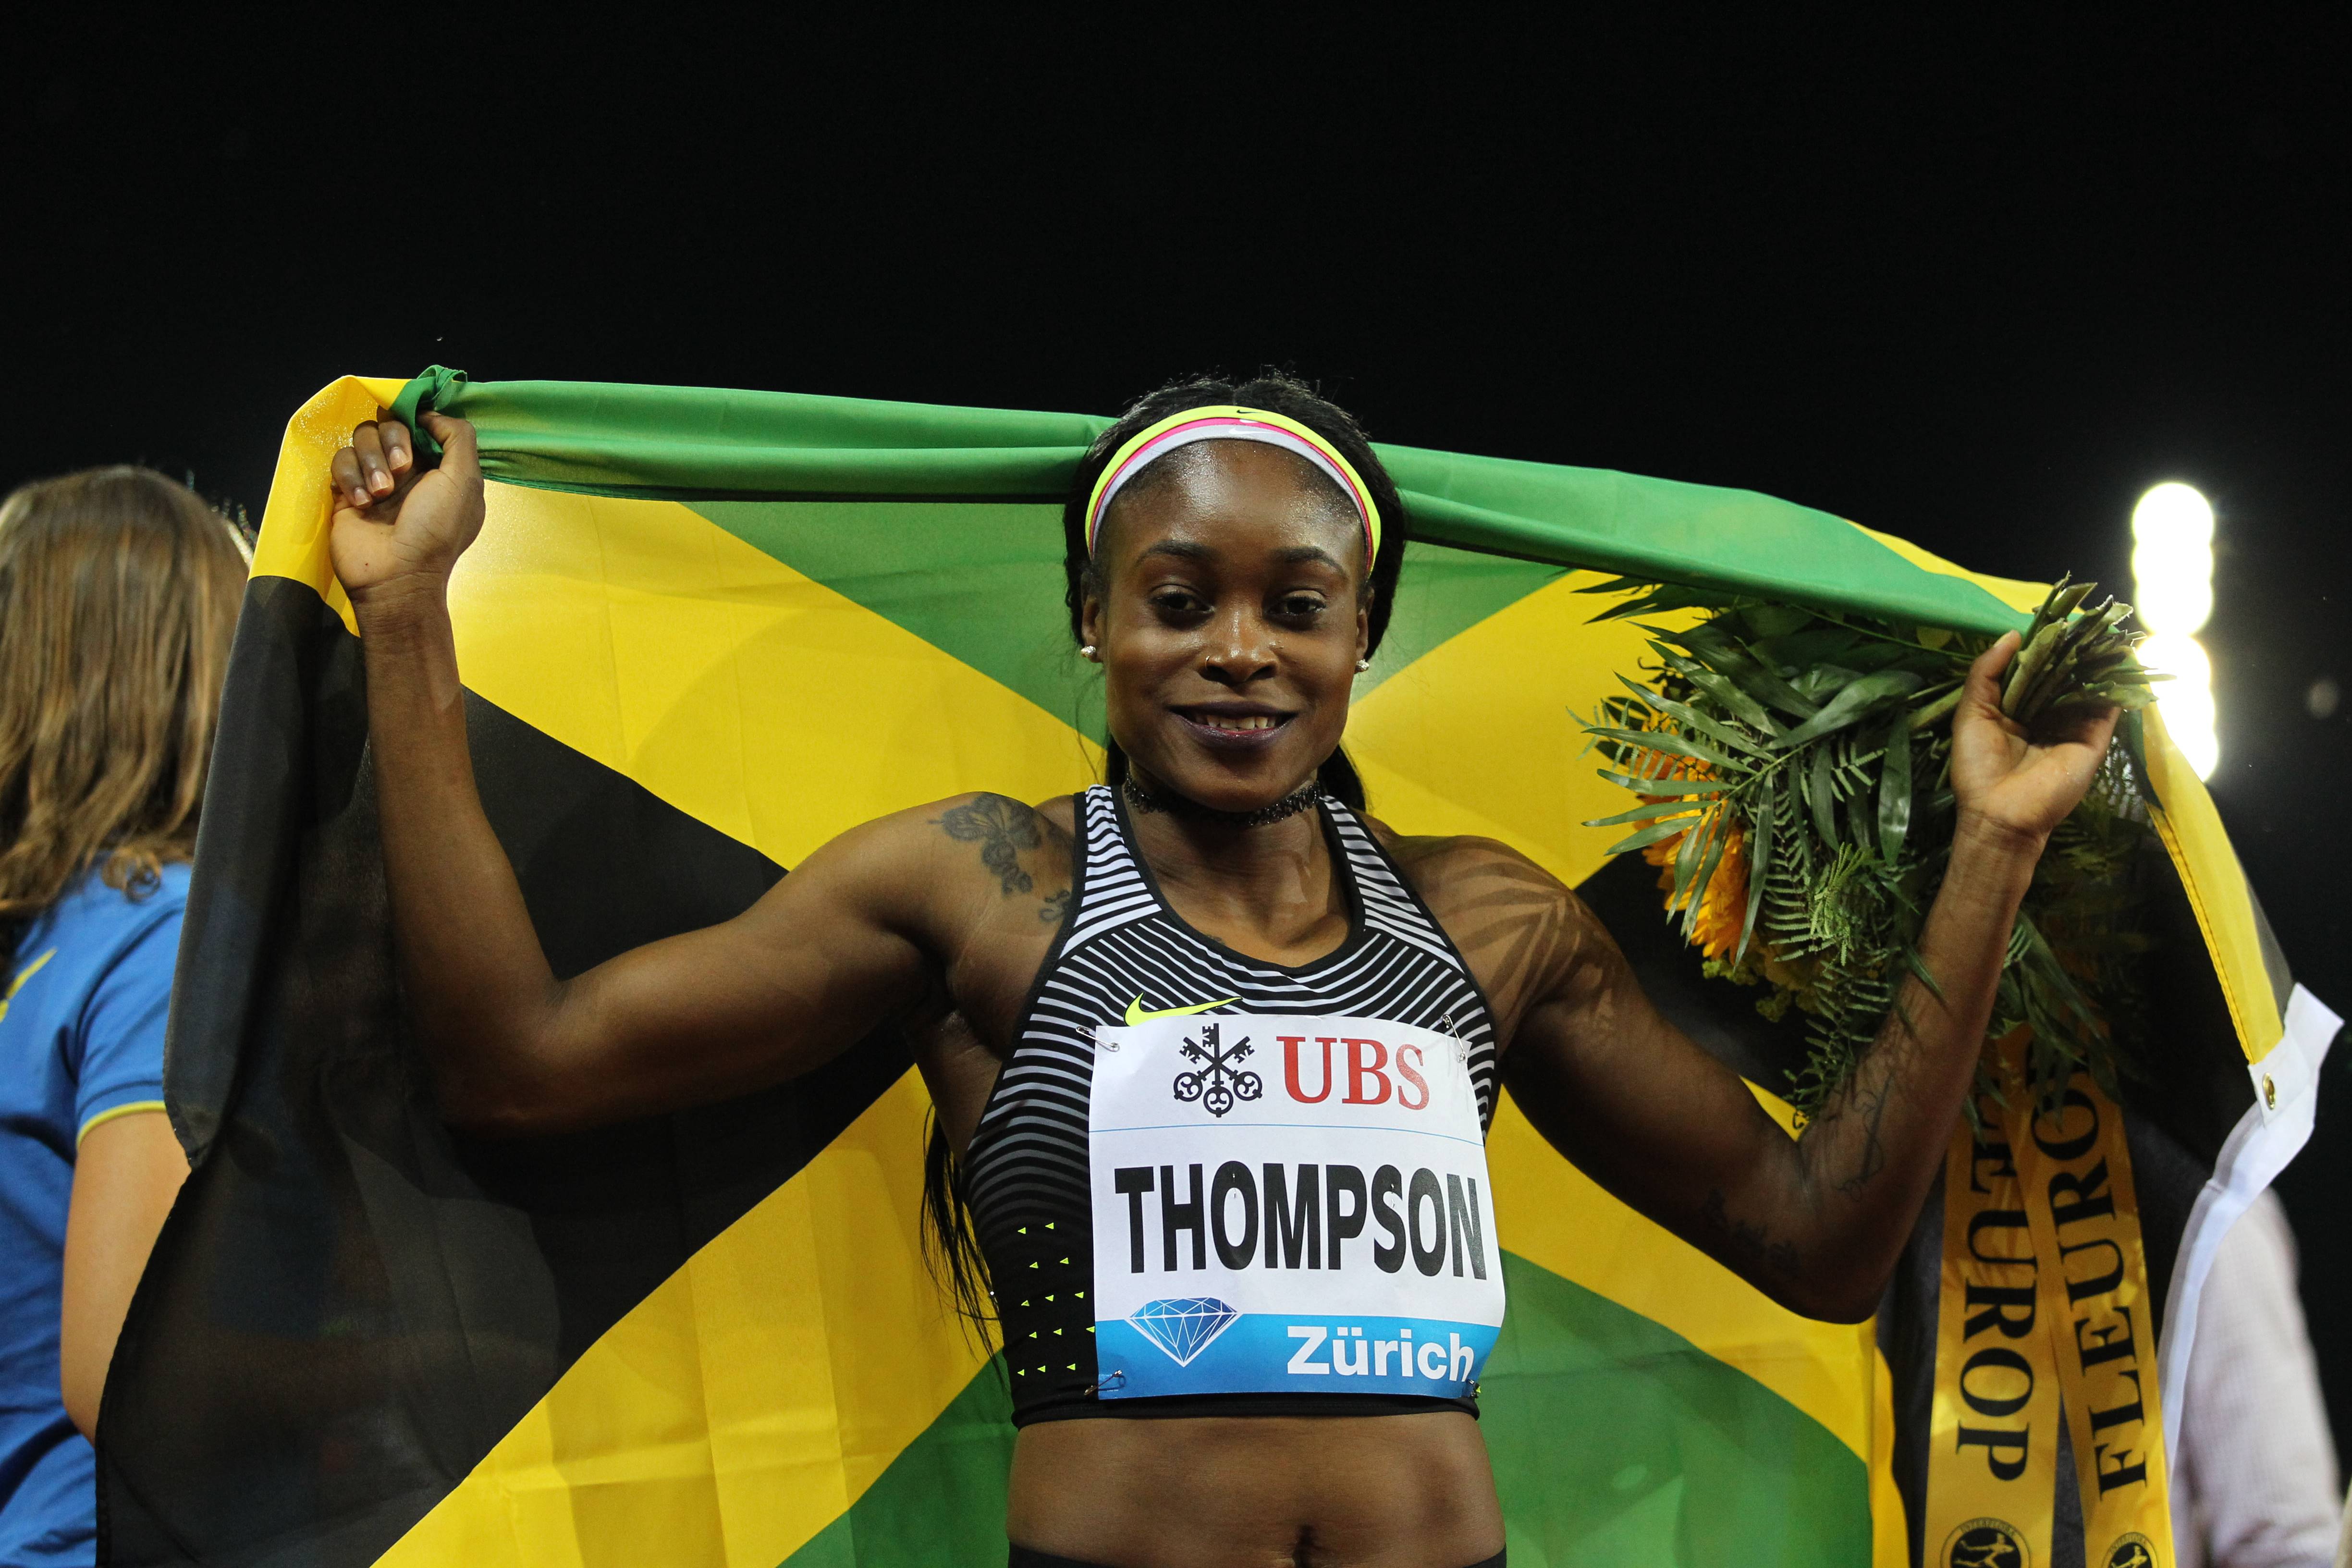 Thompson starts favourite in Shanghai DL 100m